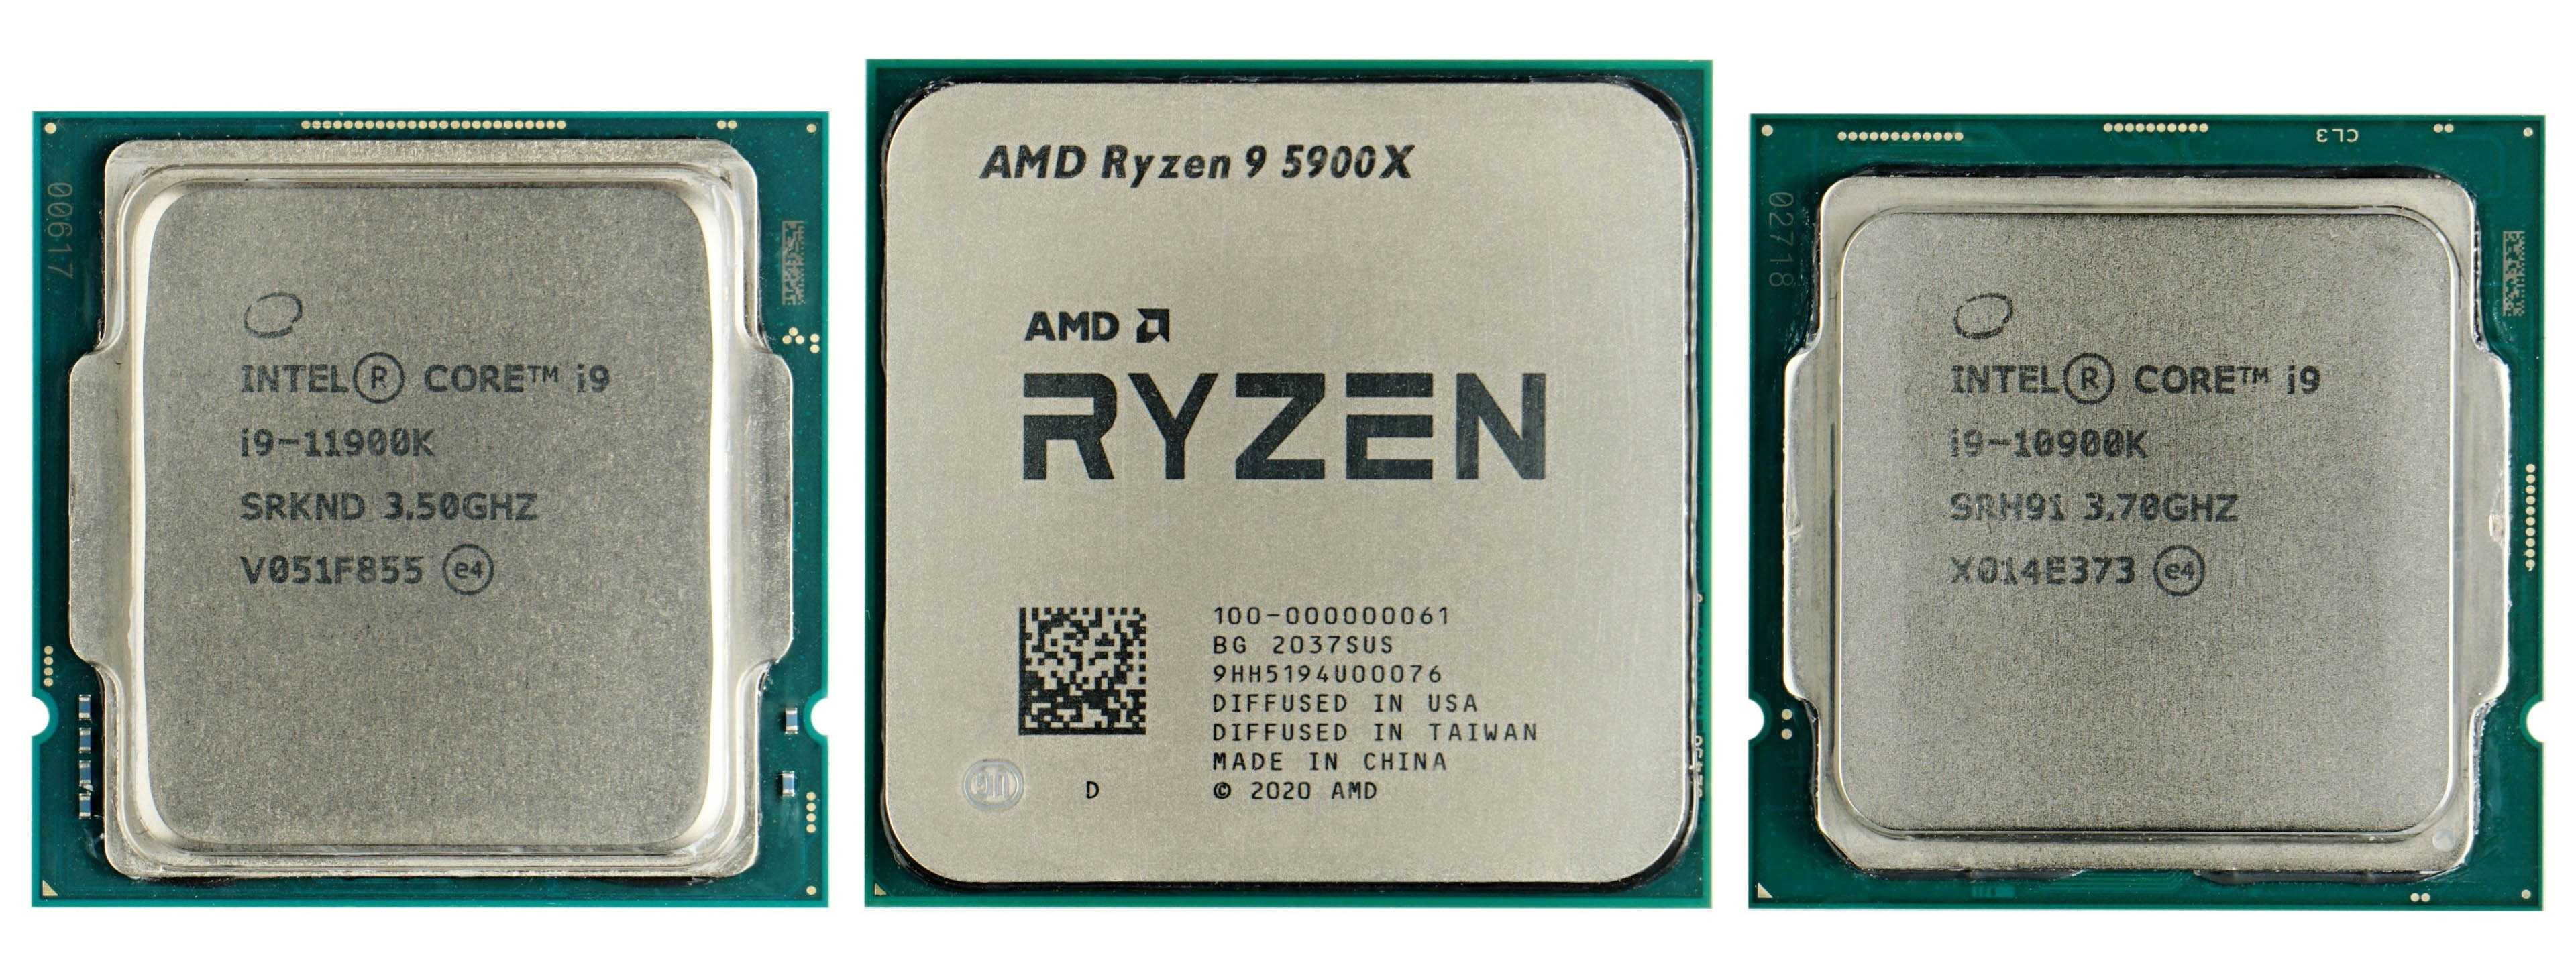 9 5900x купить. АМД 9 5900х. 5900х Ryzen. CPU AMD Ryzen 9 5900x OEM. Intel Core i9-11900k.